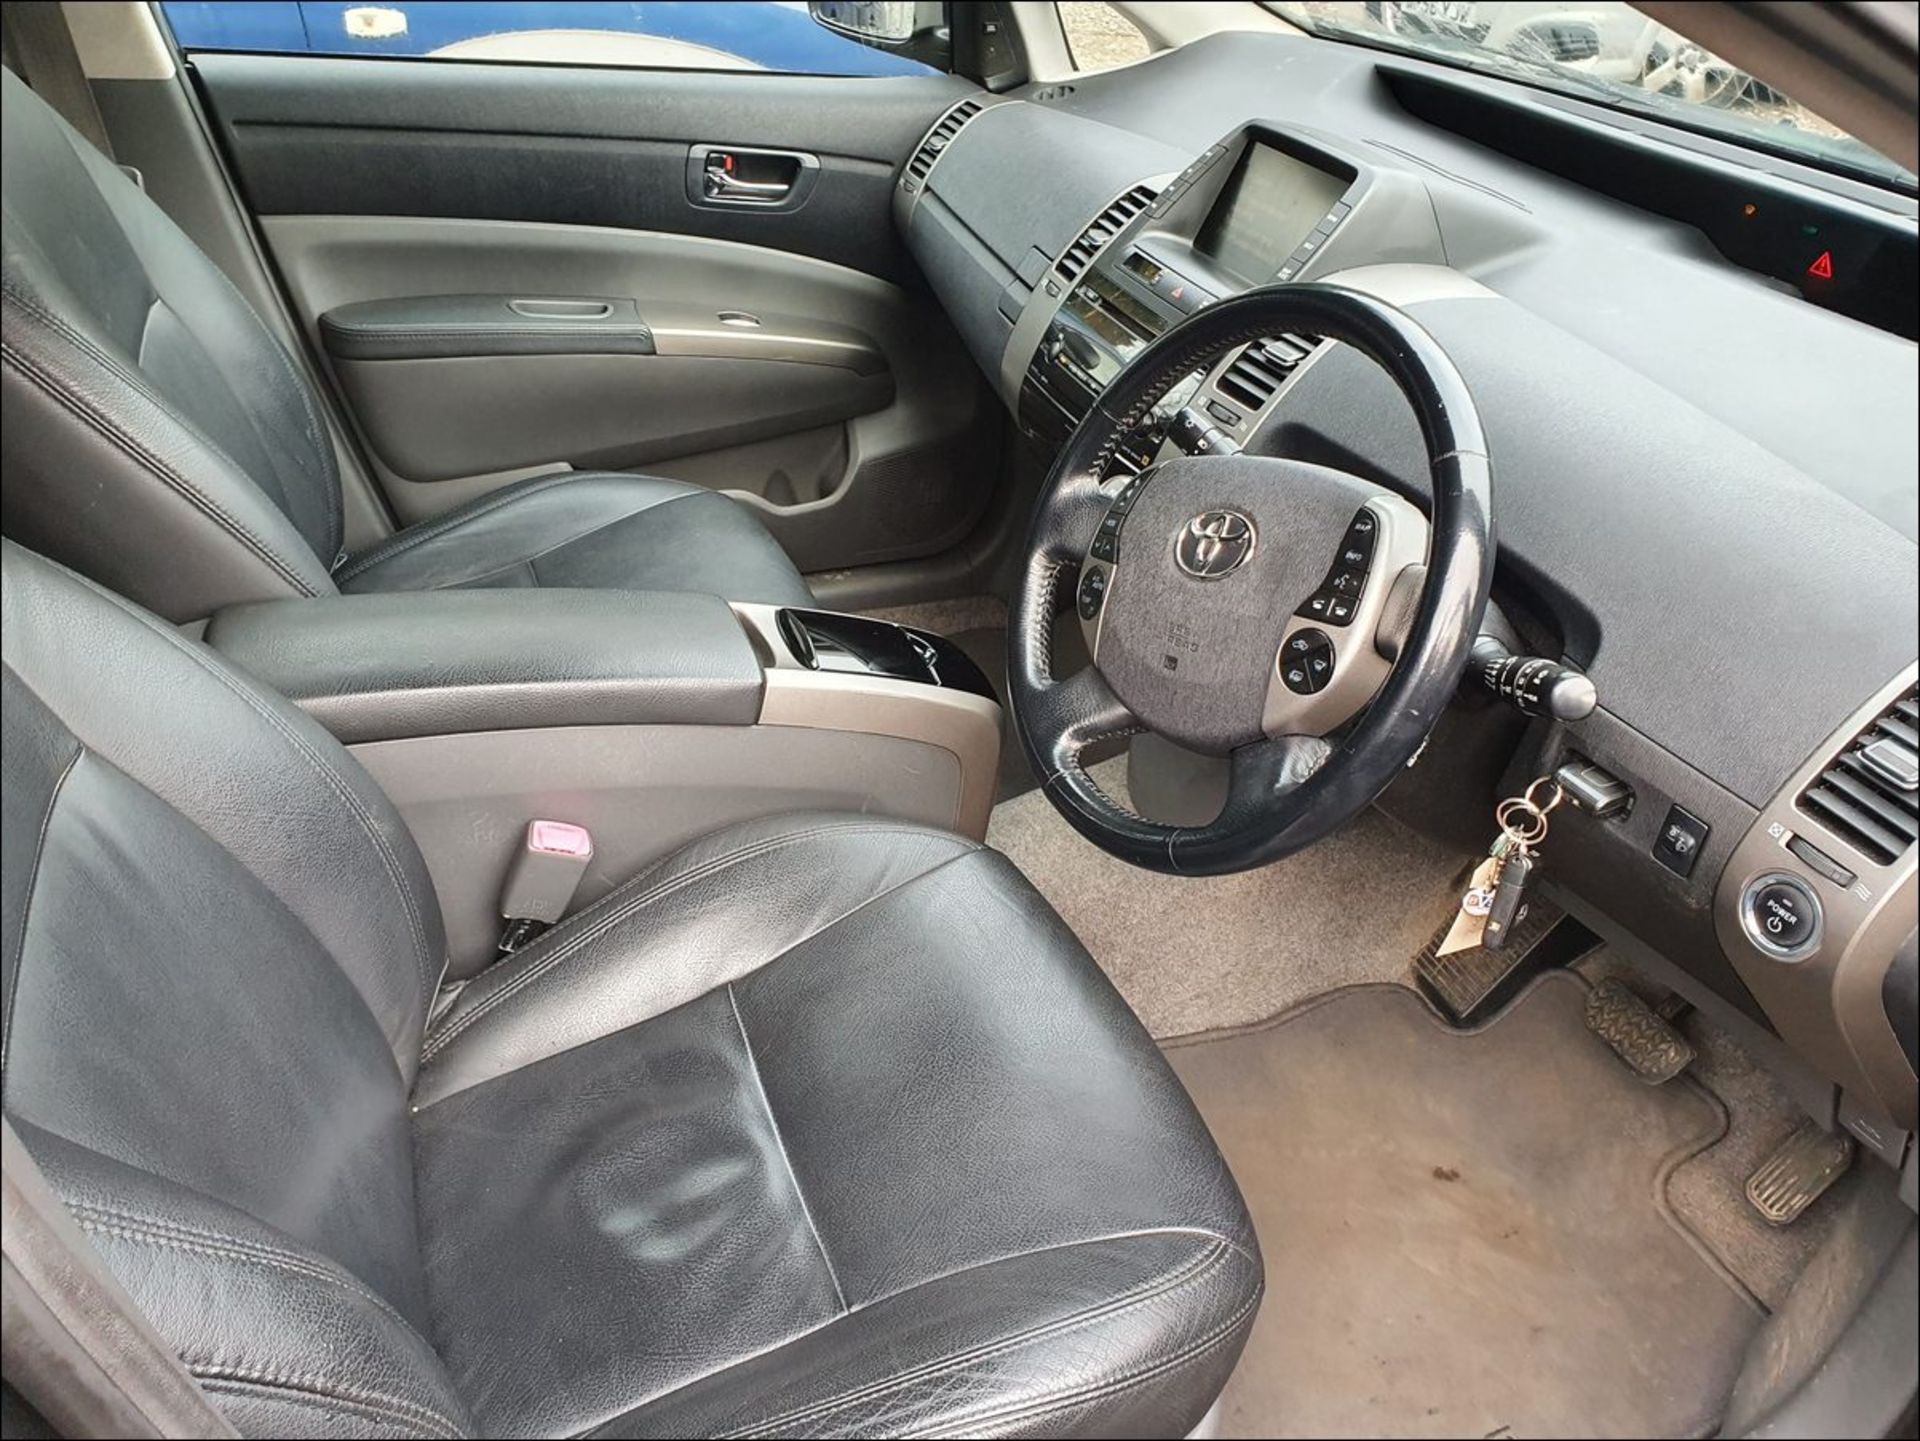 07/07 TOYOTA PRIUS T SPIRIT VV-I AUTO - 1497cc 5dr Hatchback (Grey, 169k) - Image 6 of 11